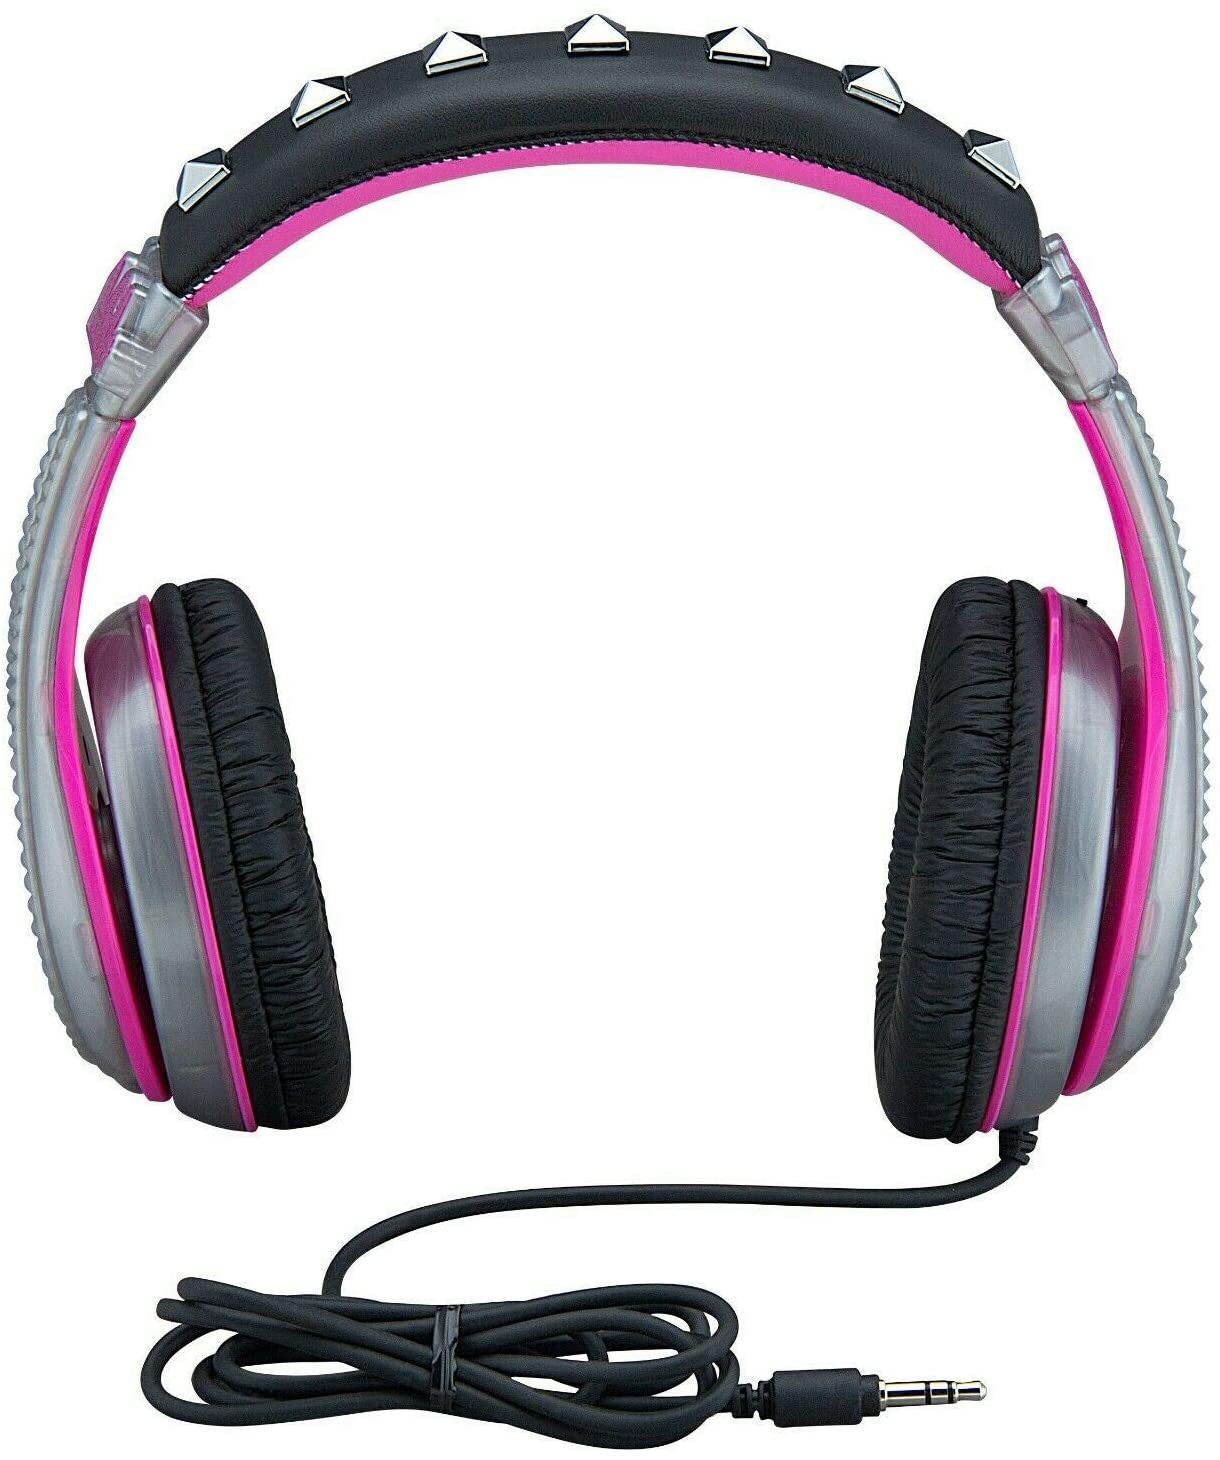 eKids LOL Surprise Headphones for Kids, Wired Headphones (3.5mm Jack) 